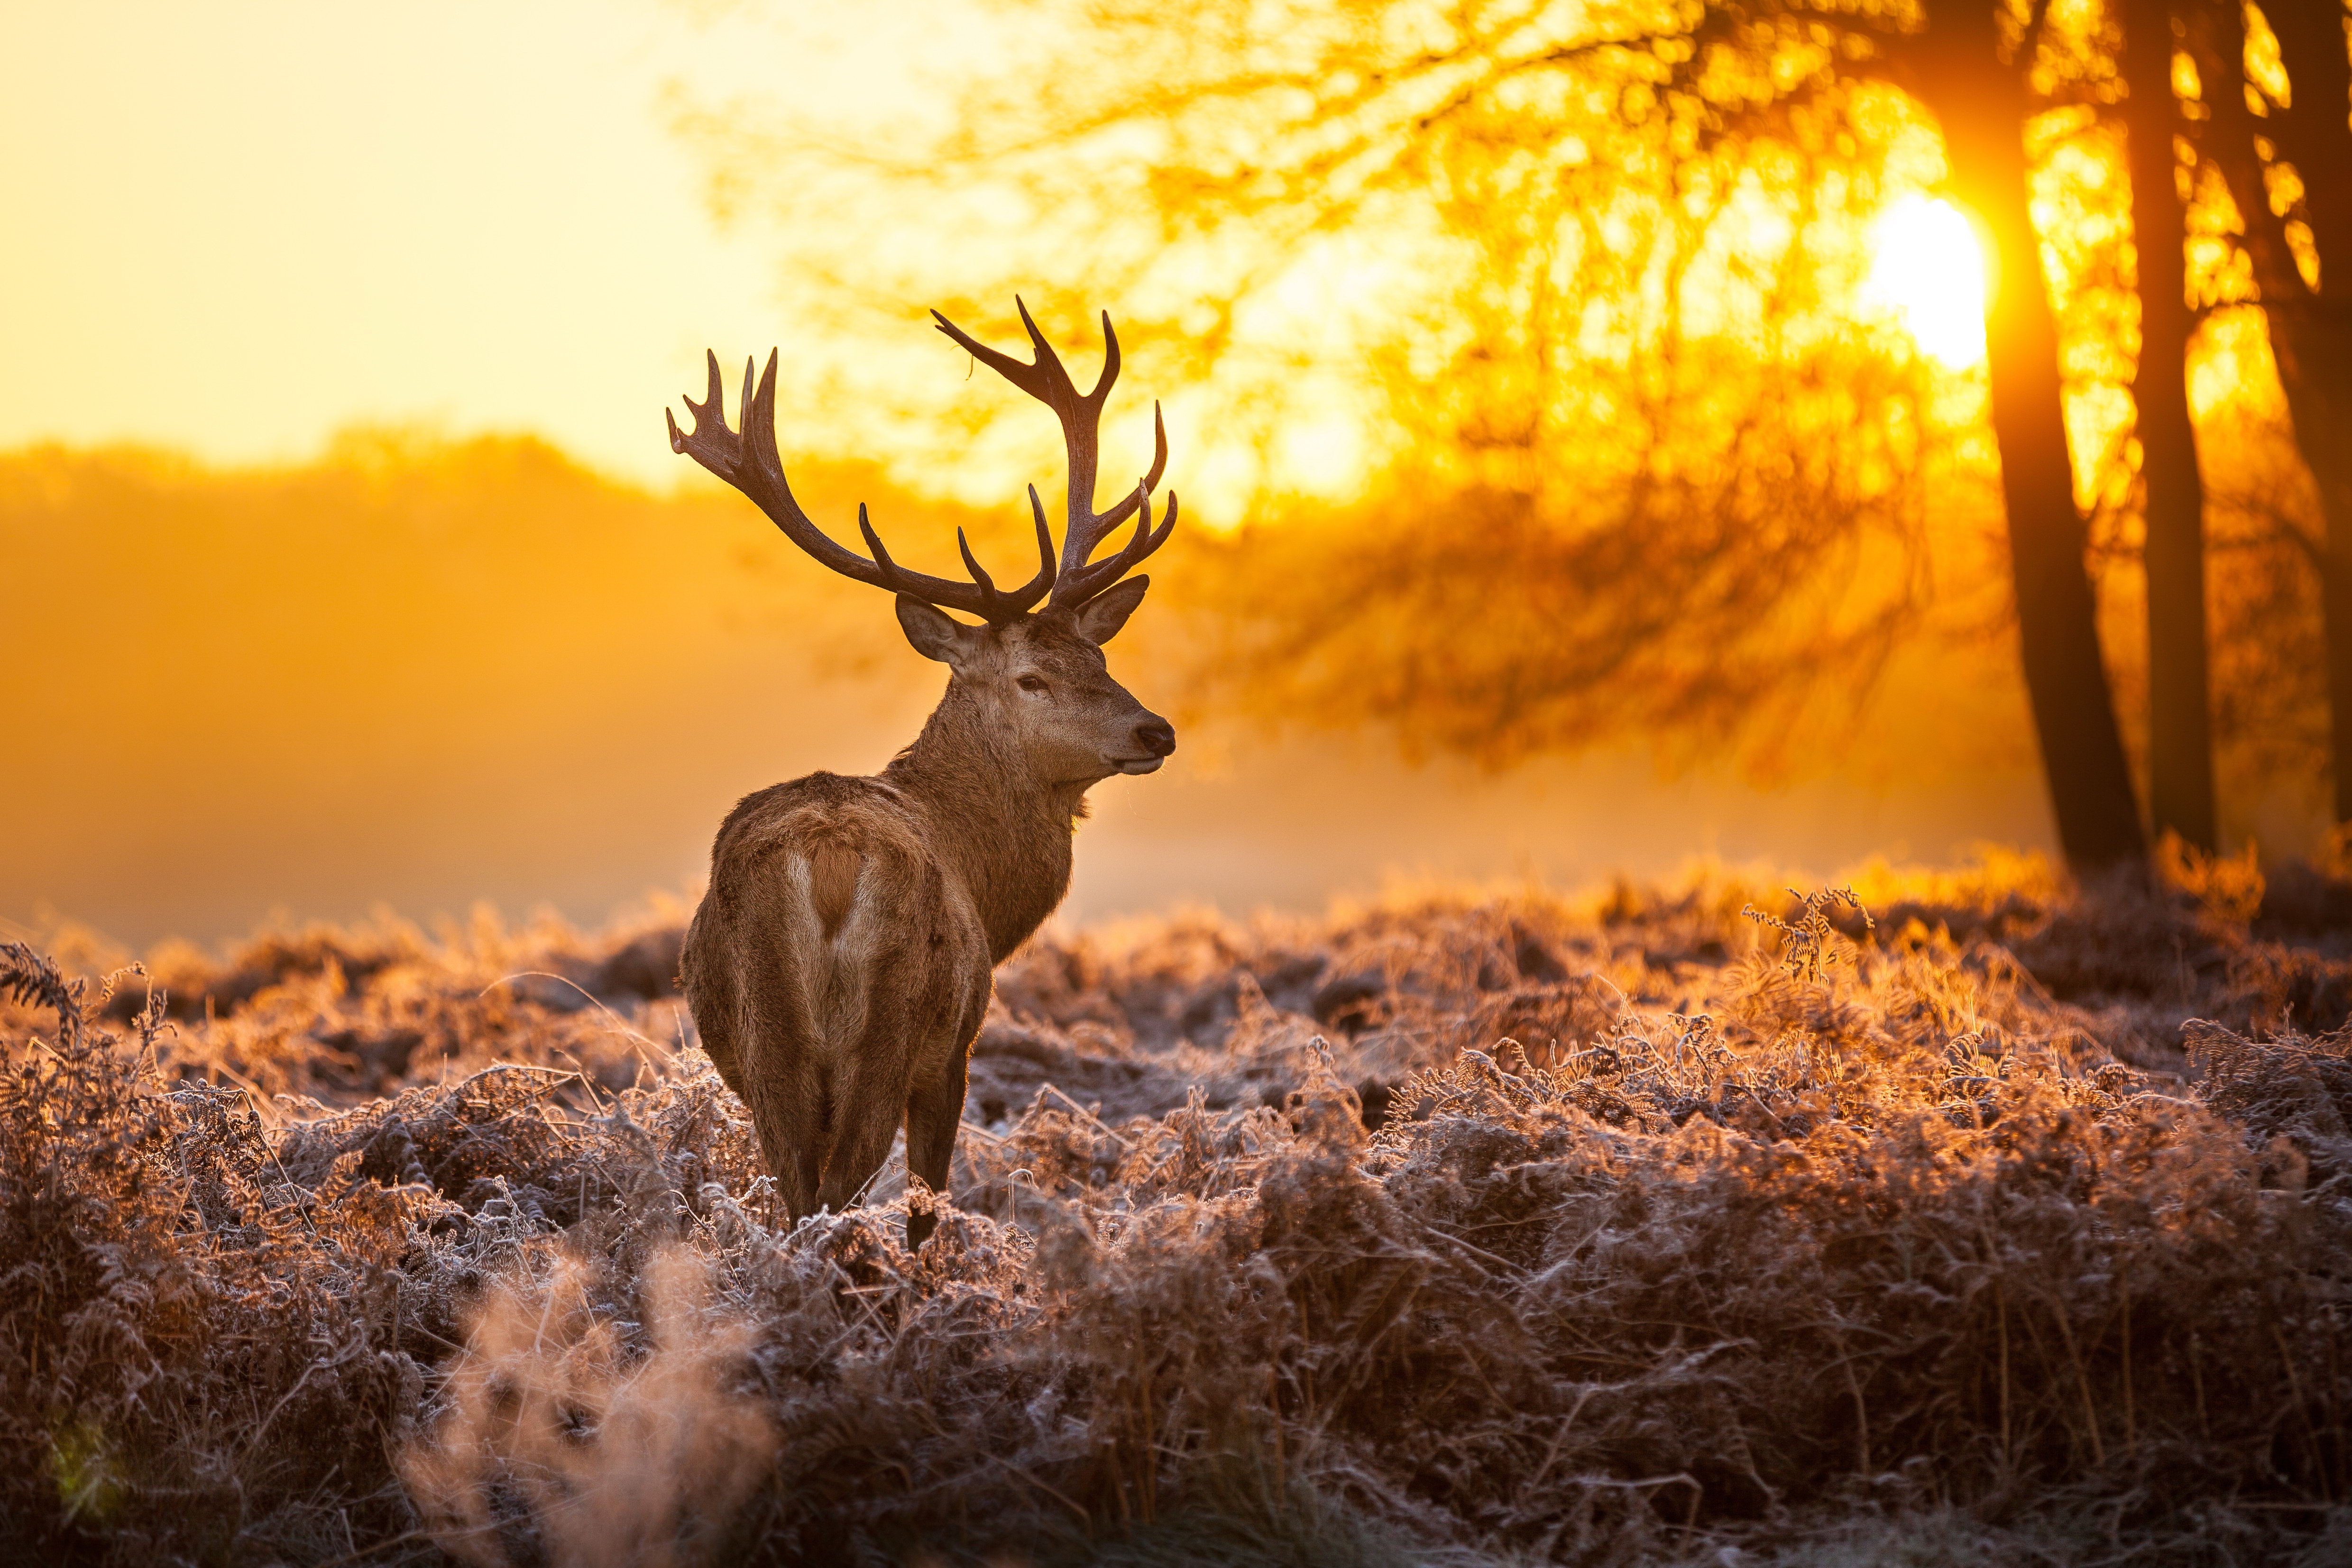 Free deer backgrounds photos download.